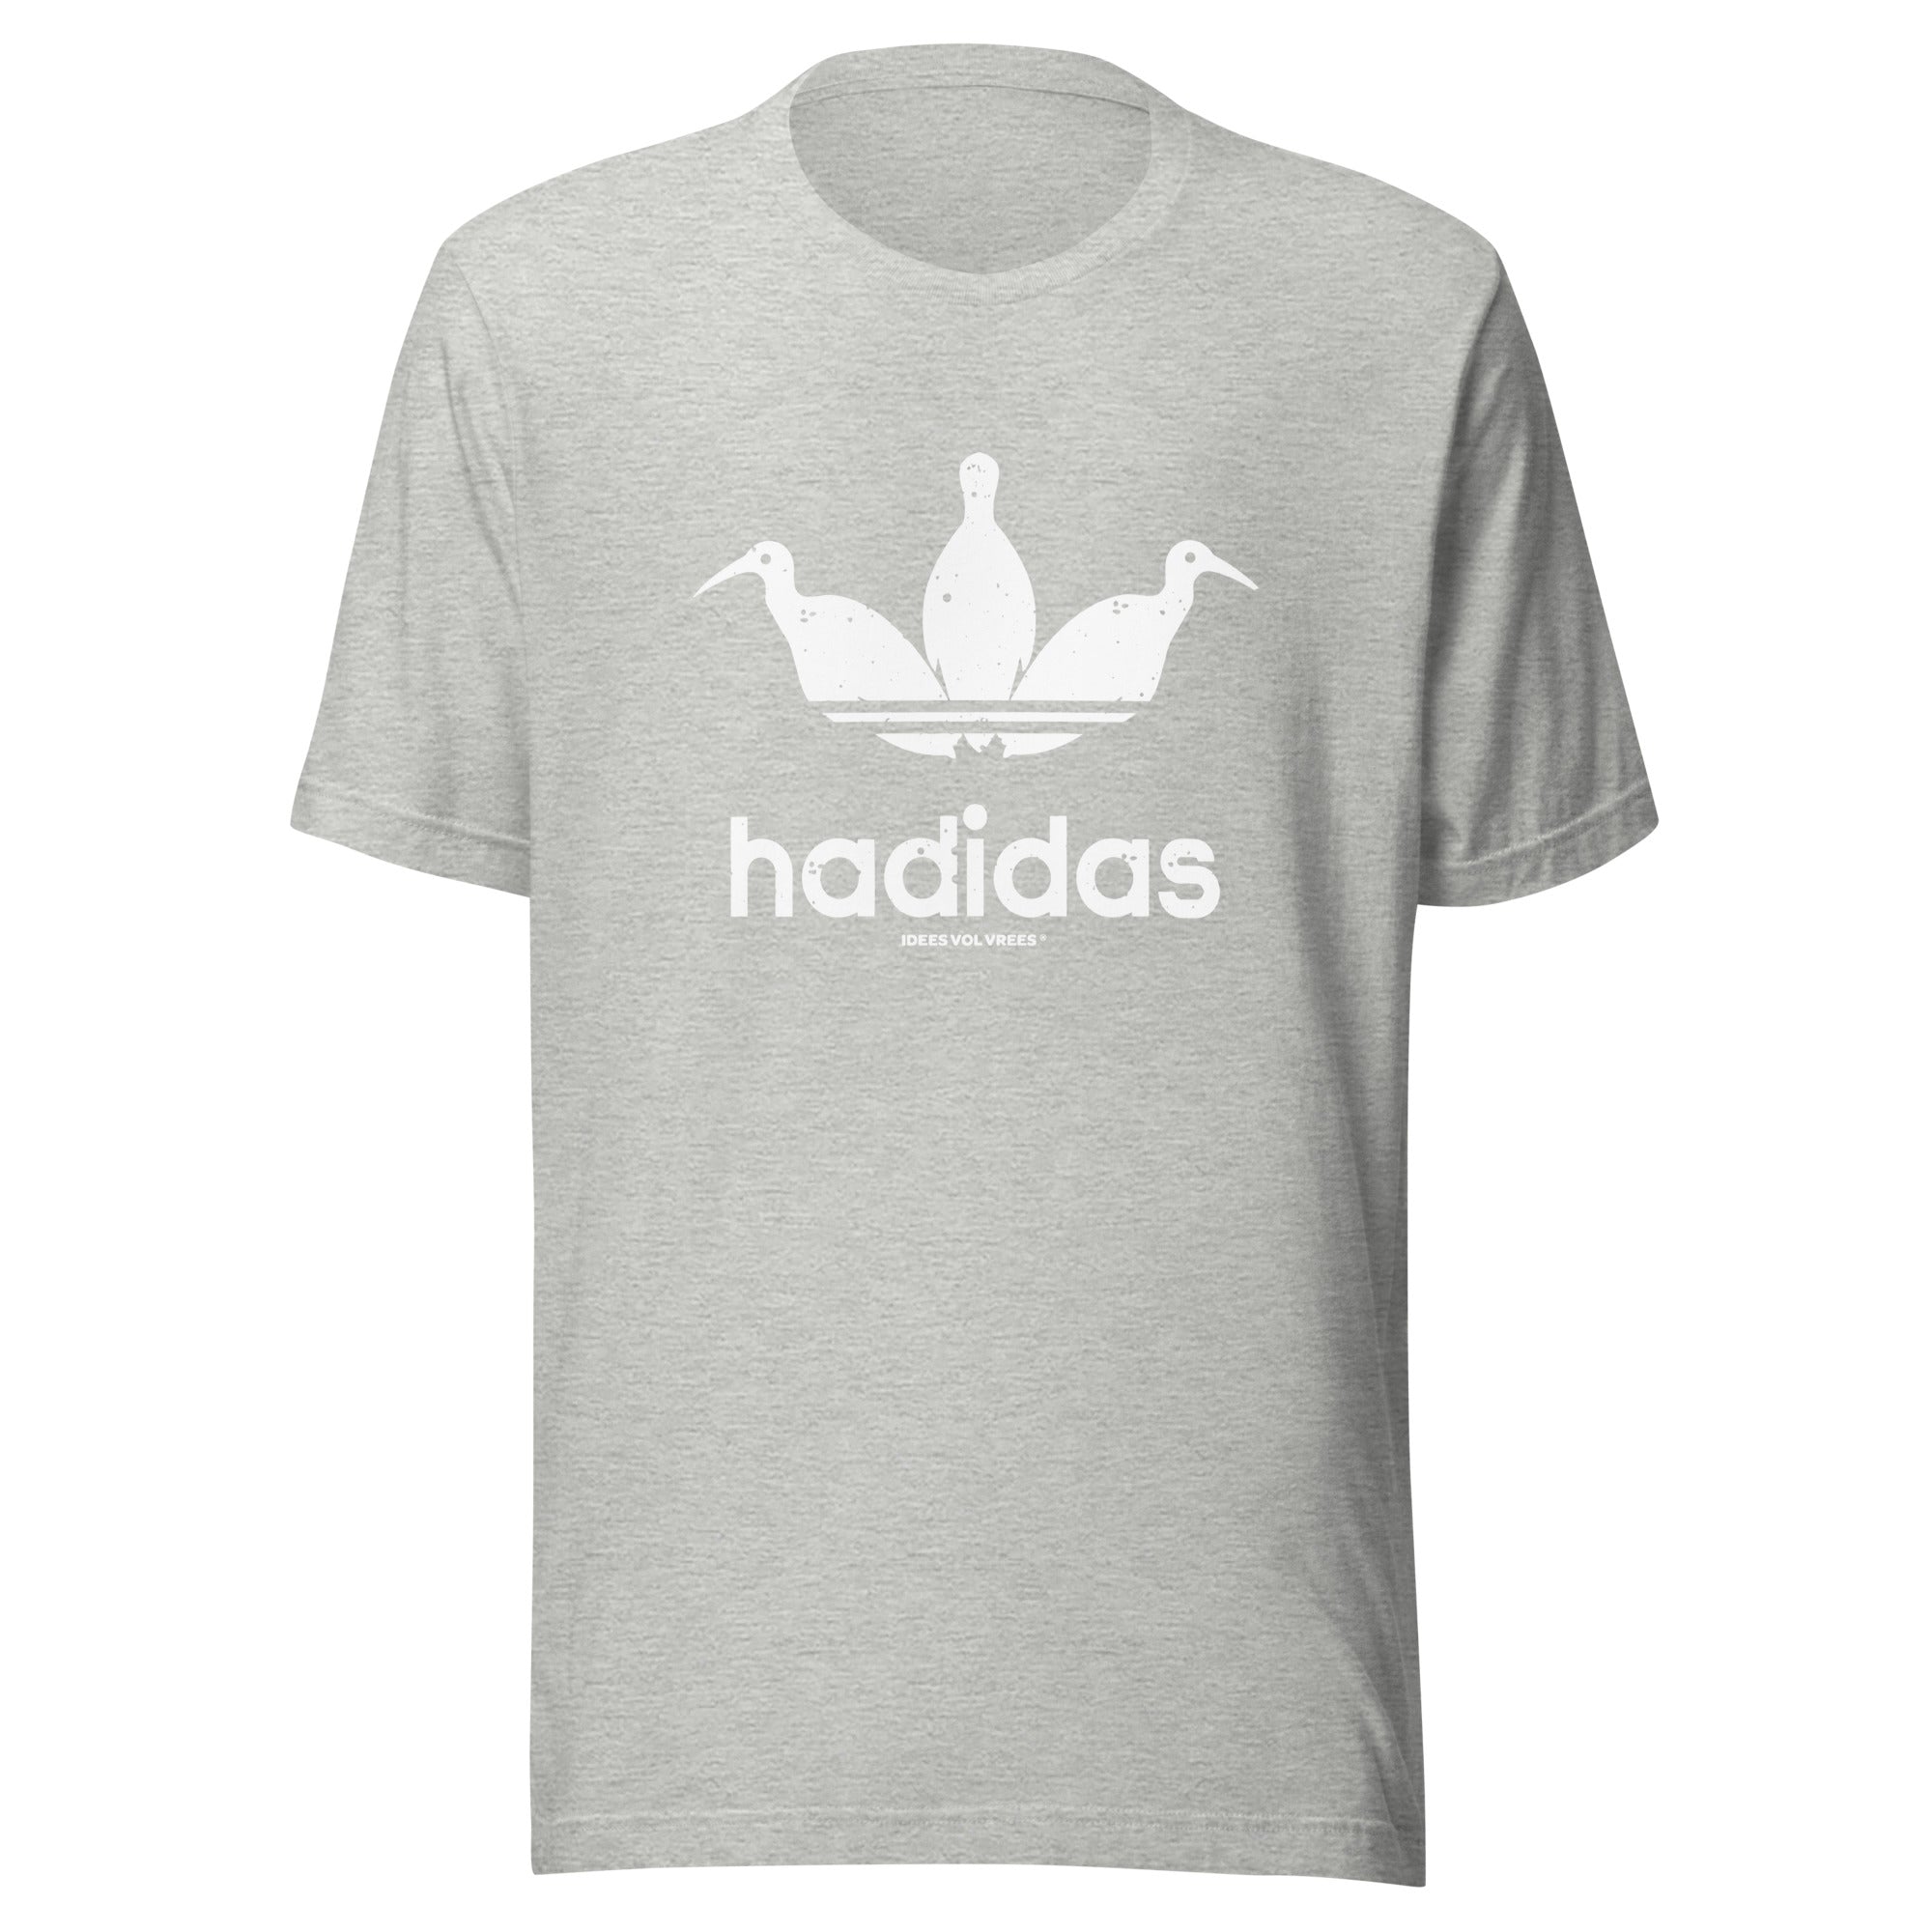 [INTERNASIONAAL] Idees Vol Vrees® Hadidas Men's T-shirt